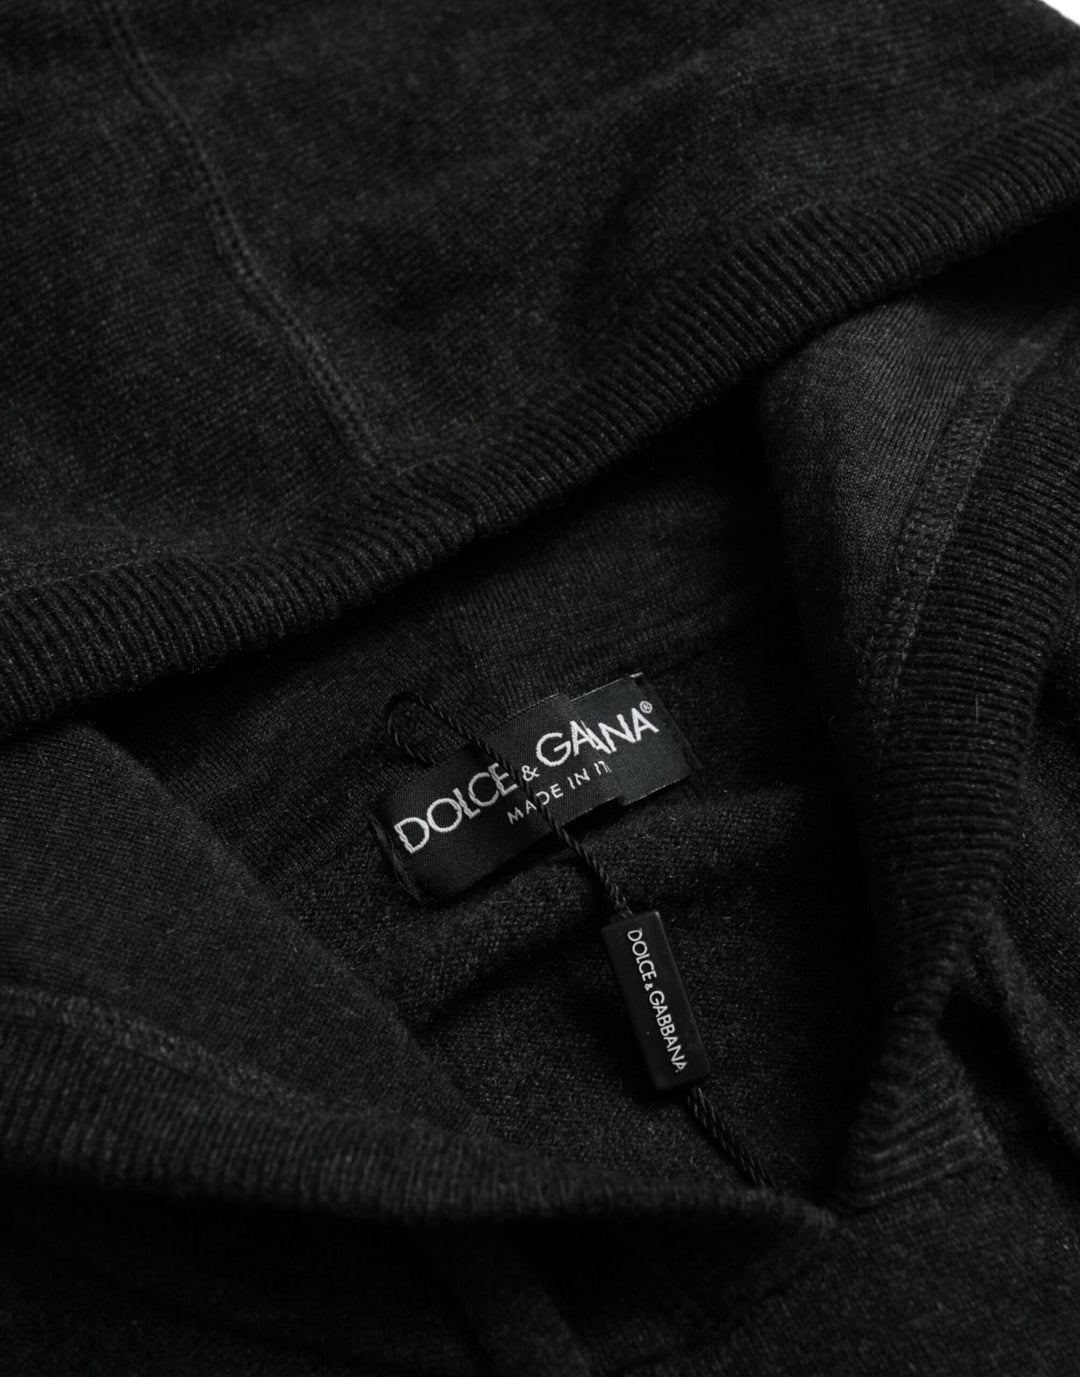 Dolce & Gabbana Dark Gray Cashmere Hooded Pullover Sweater